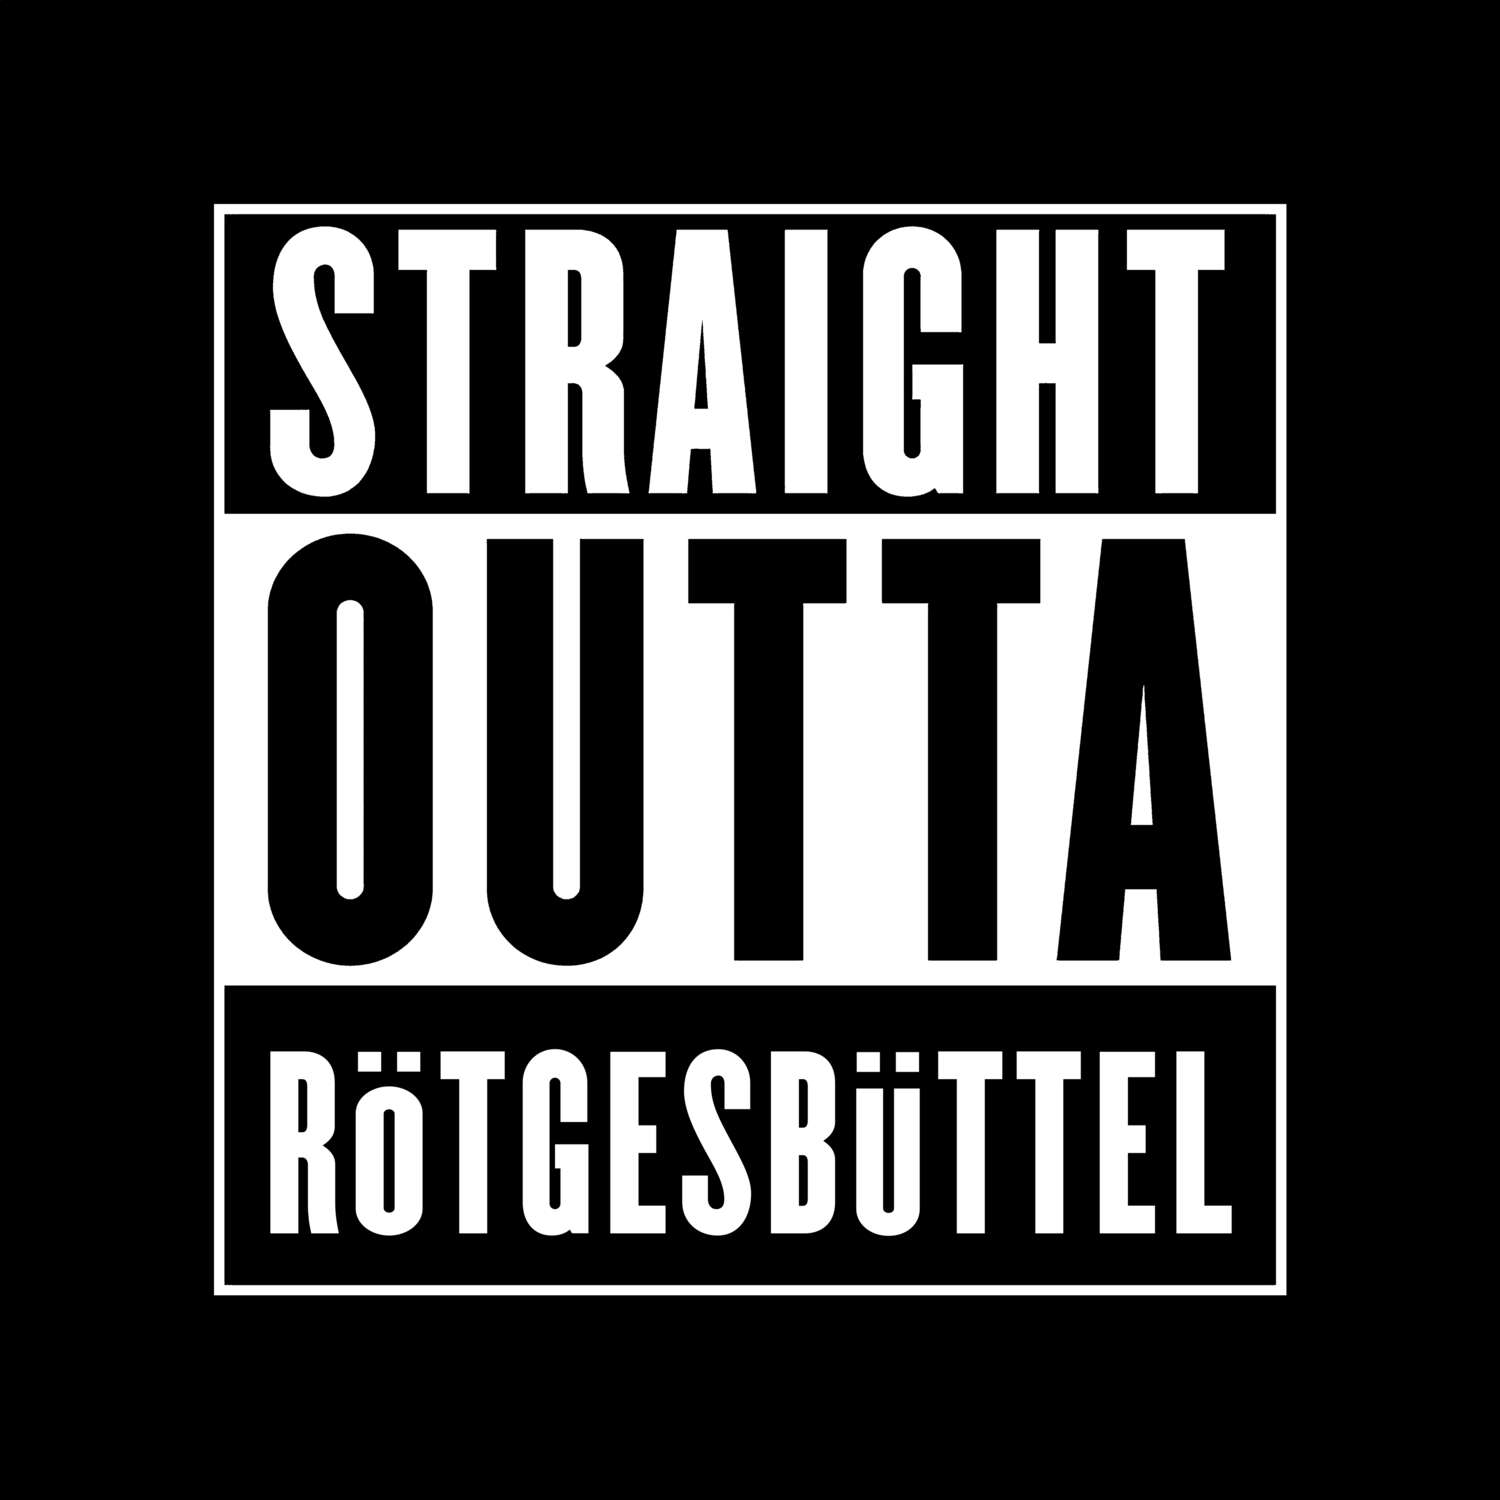 Rötgesbüttel T-Shirt »Straight Outta«